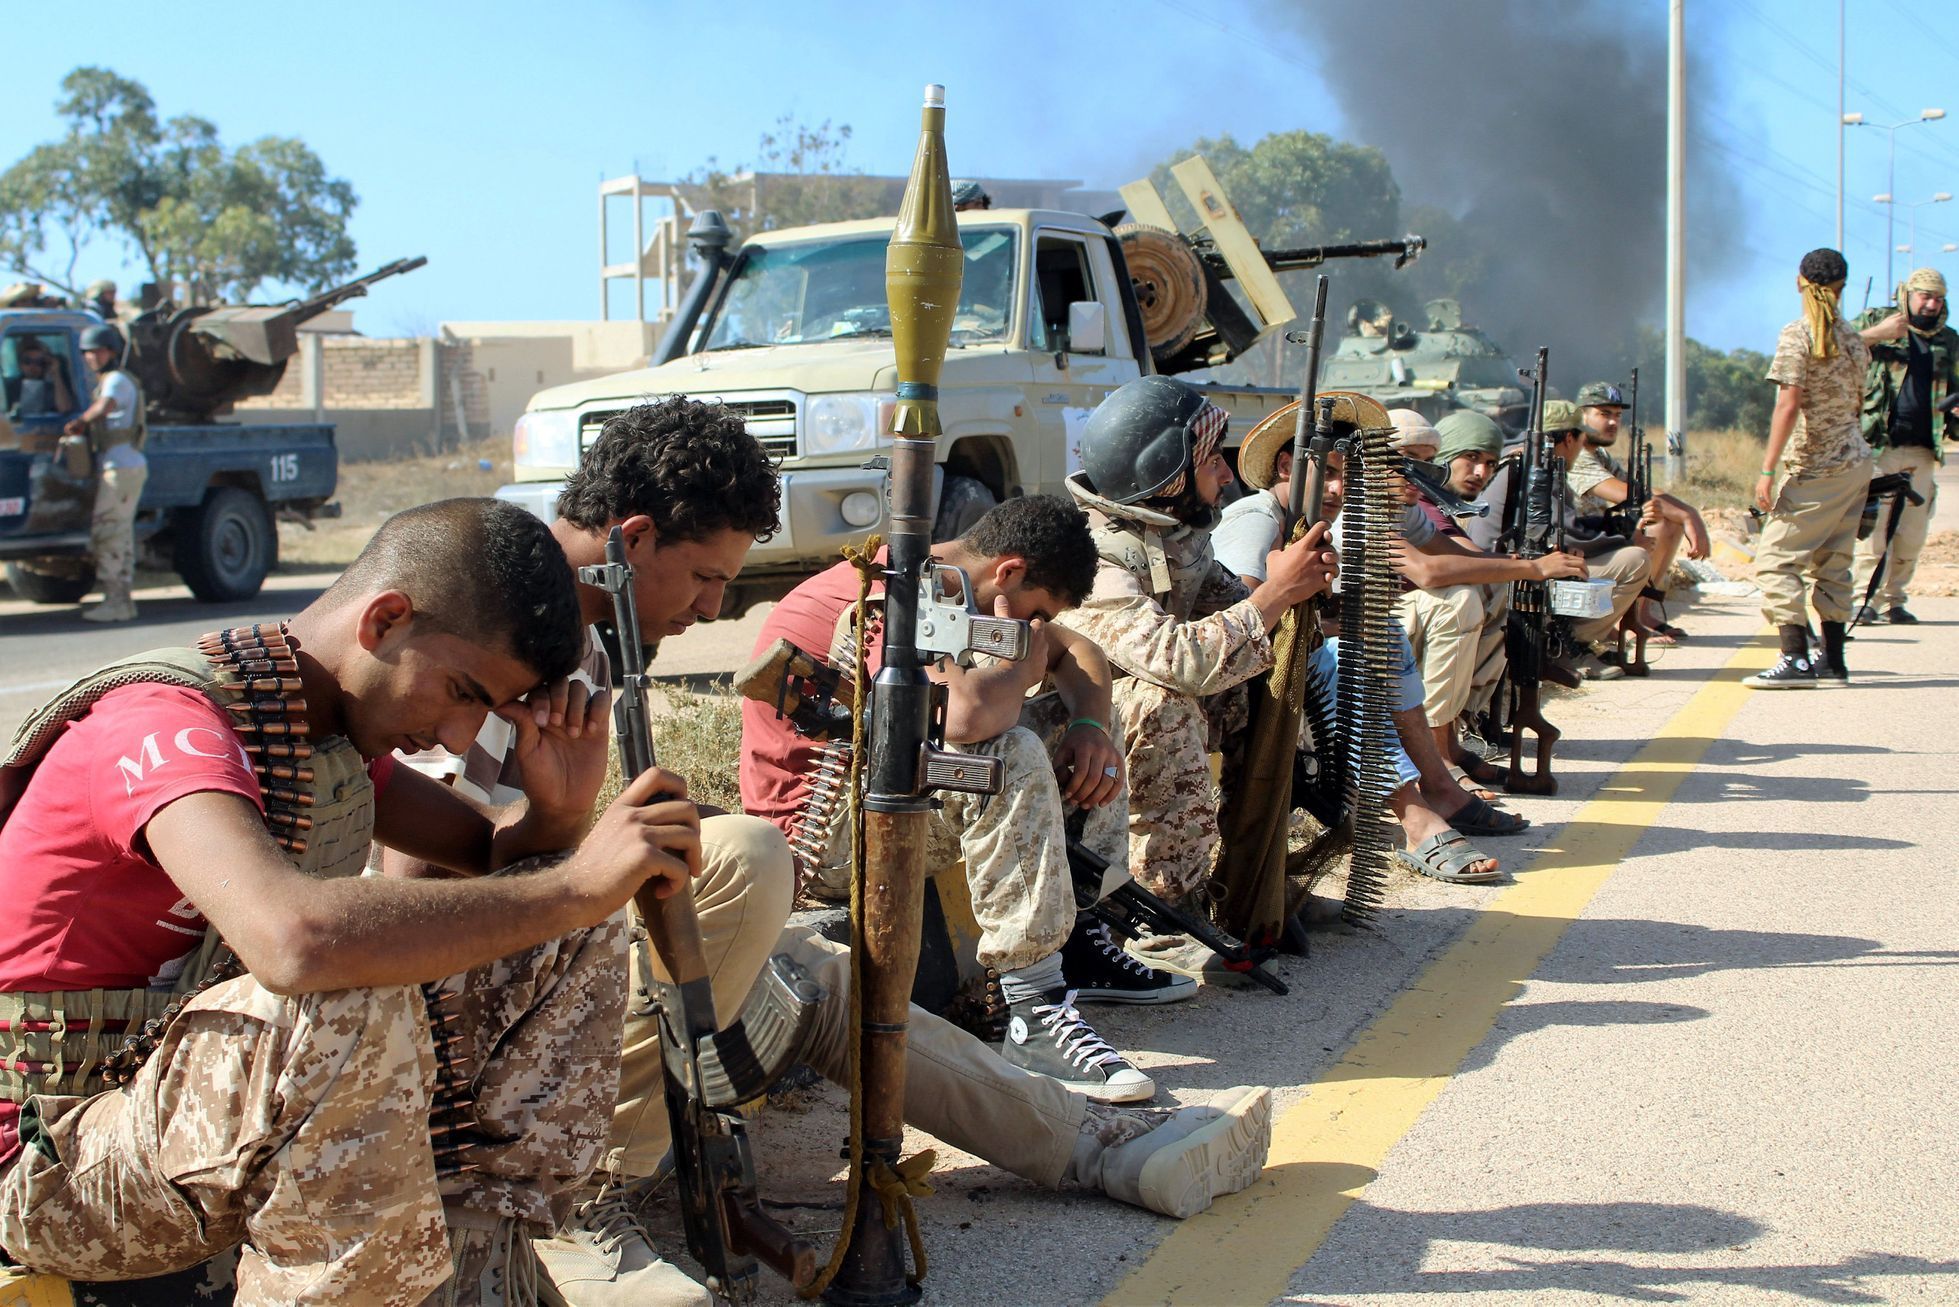 Boje o libyjskou Syrtu, libyjské jednotky